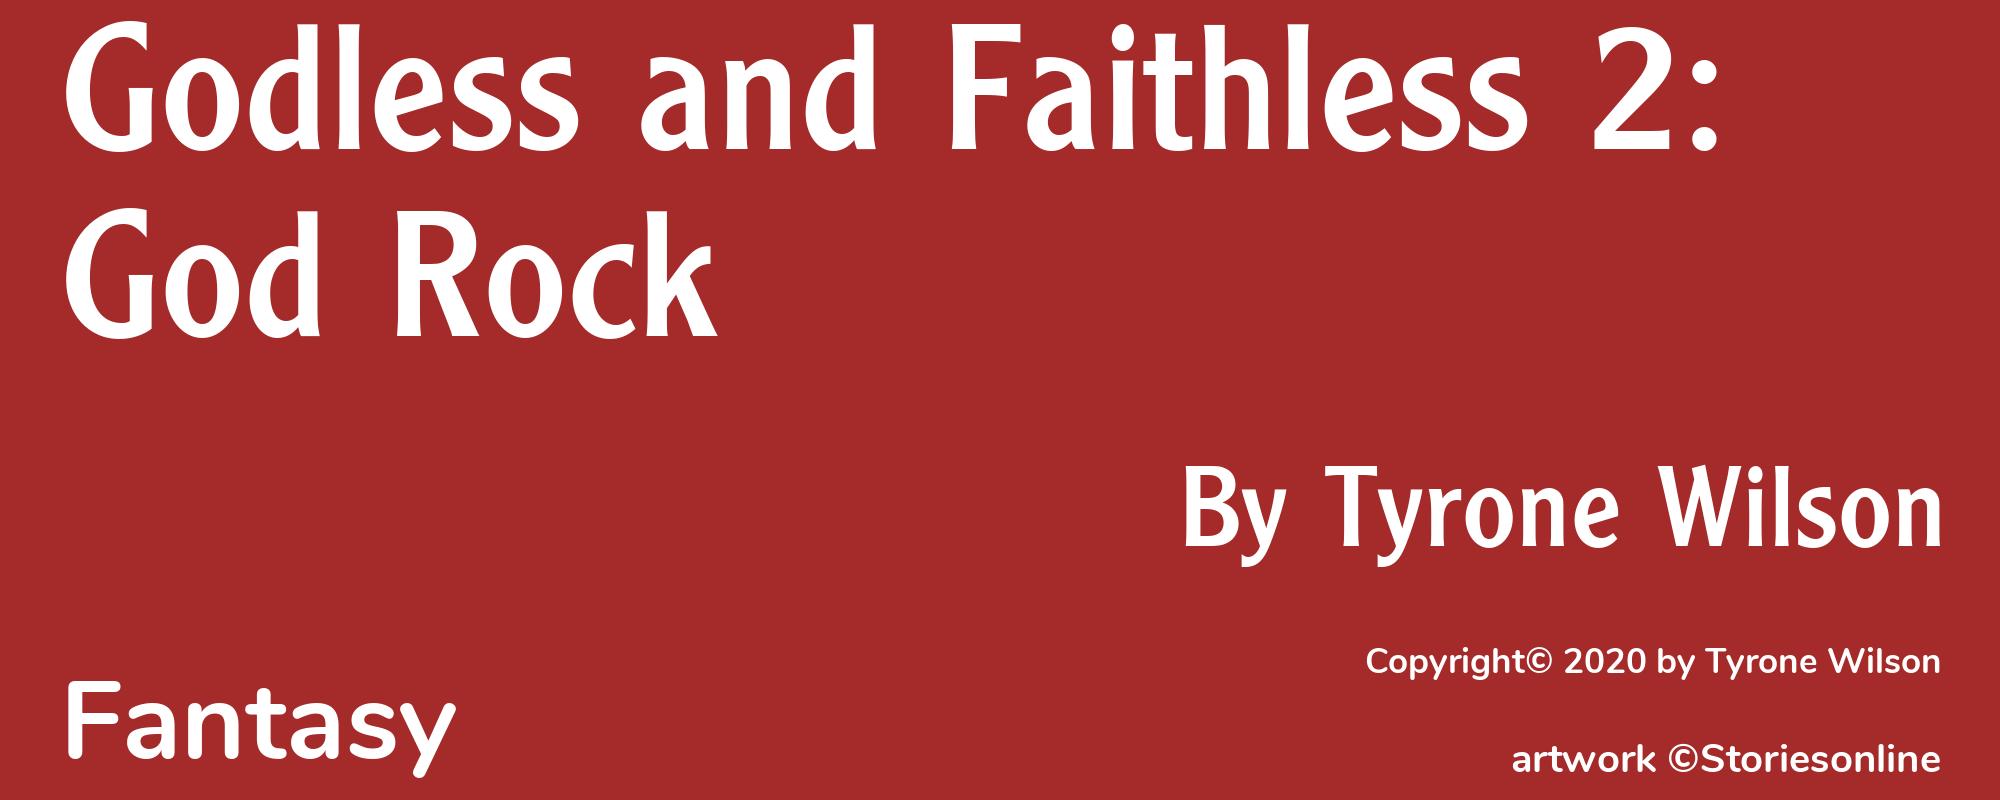 Godless and Faithless 2: God Rock - Cover